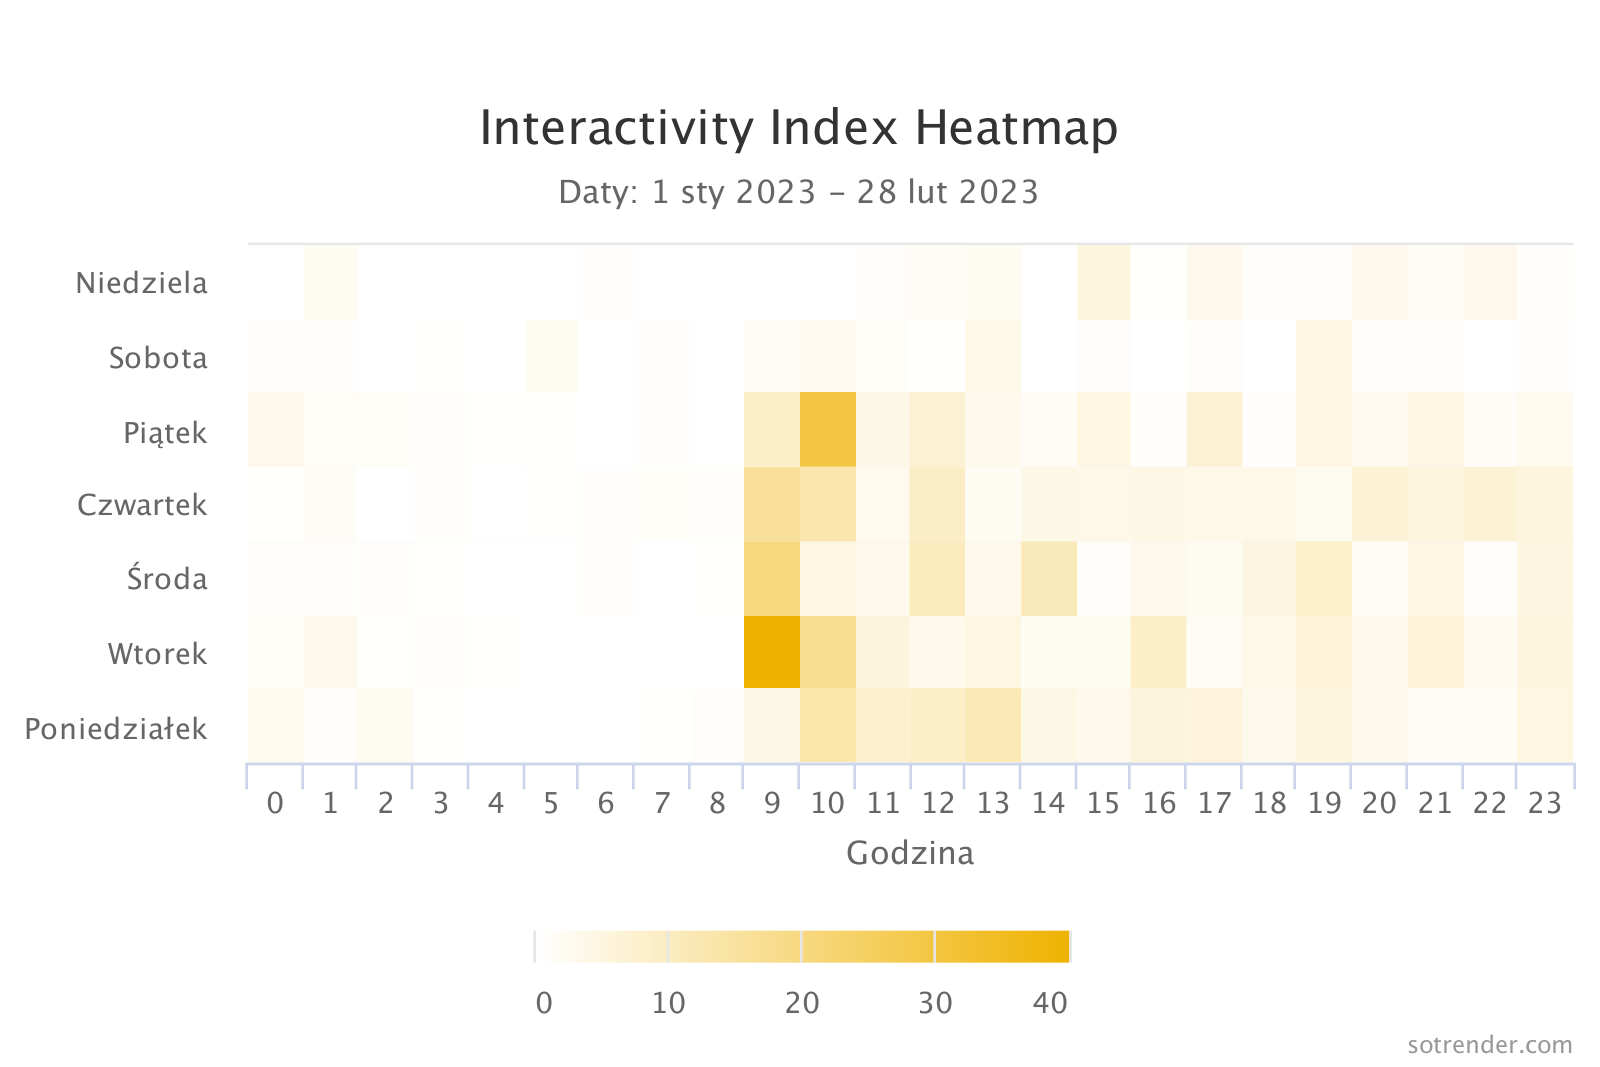 ingteractivity index heatmapa